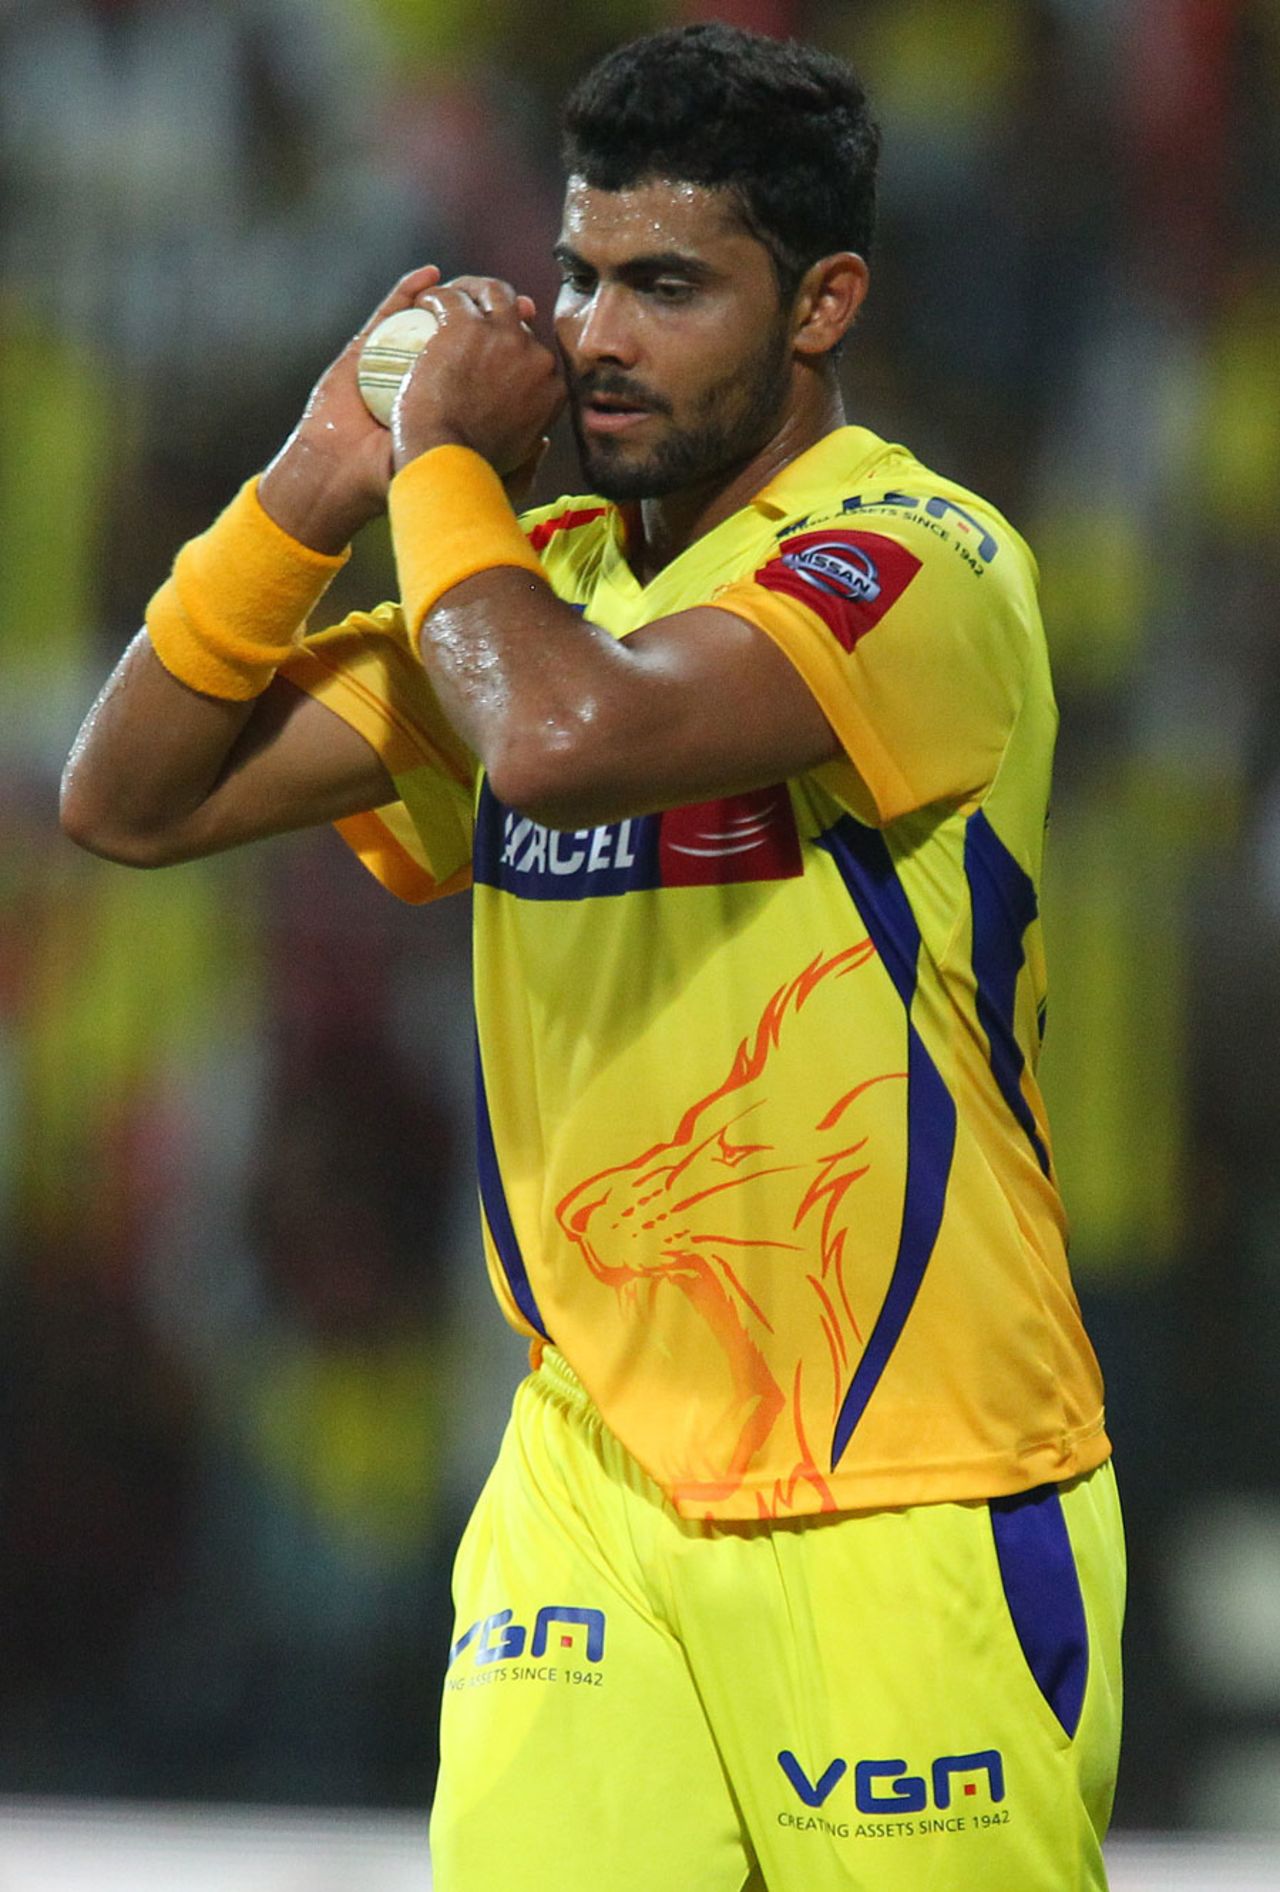 Ravindra Jadeja completes a catch, Chennai Super Kings v Pune Warriors, IPL, Pune, April 15, 2013